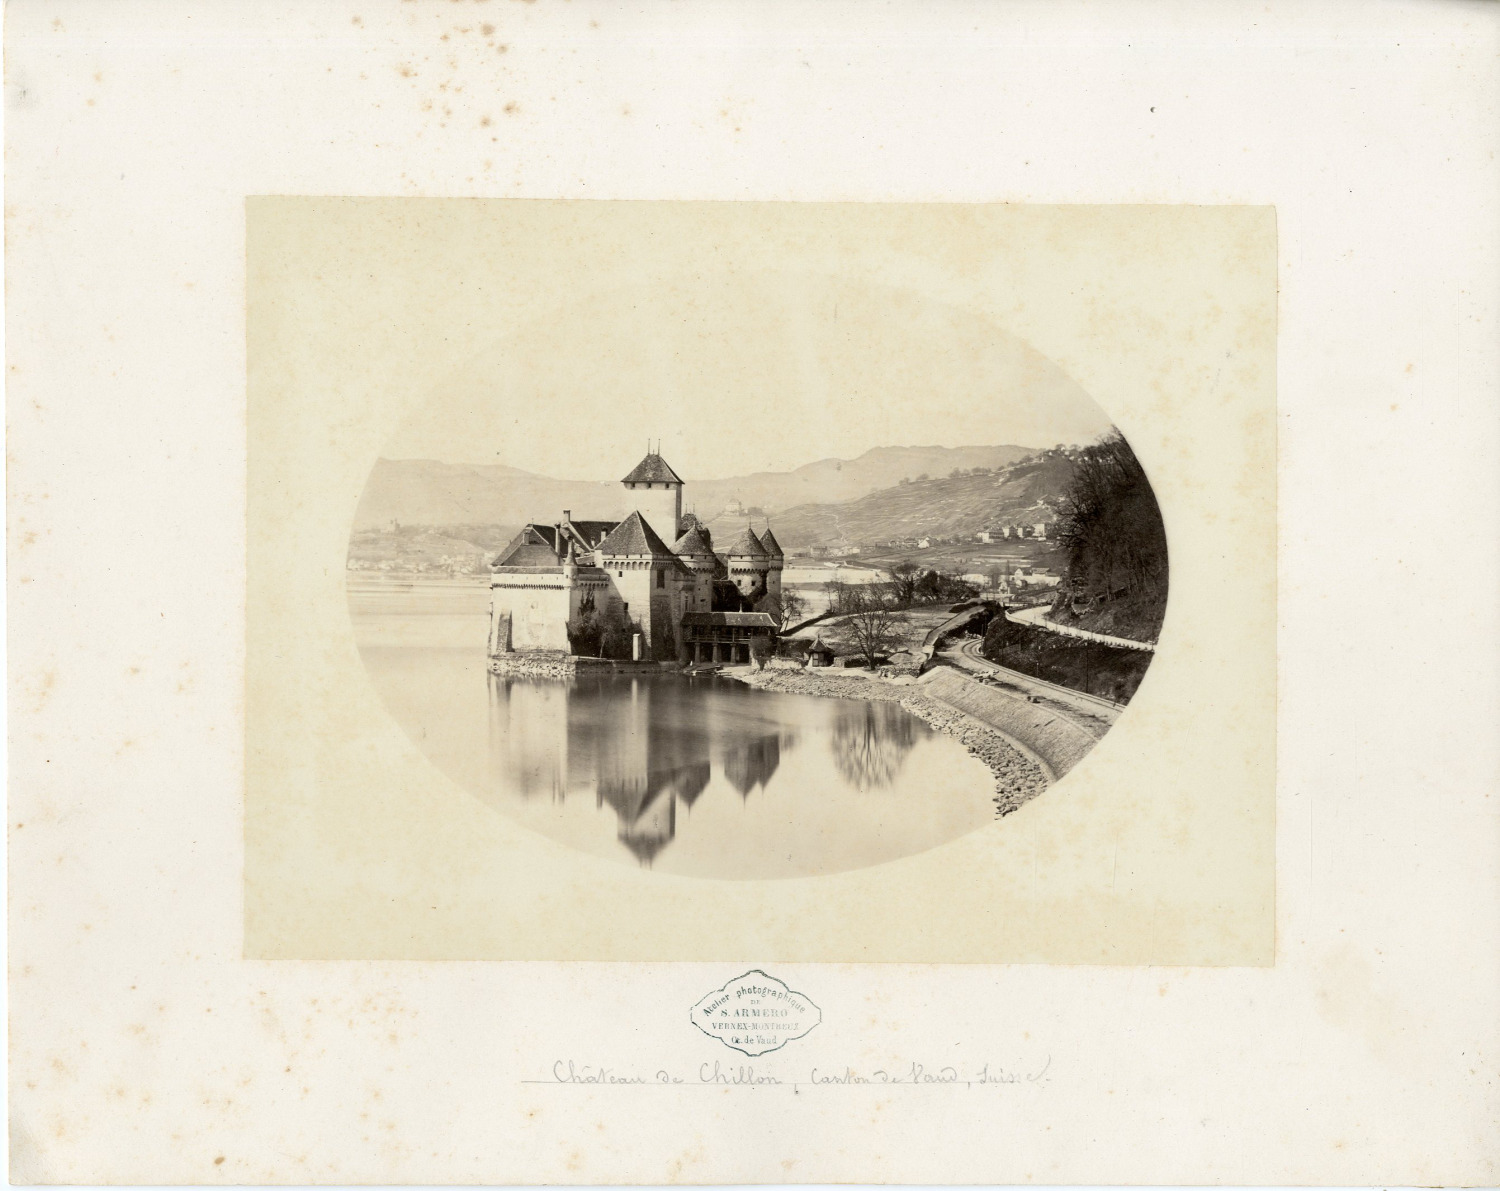 S. Armero. Switzerland, Chillon Castle, Canton of Vaud vintage albumen print.  